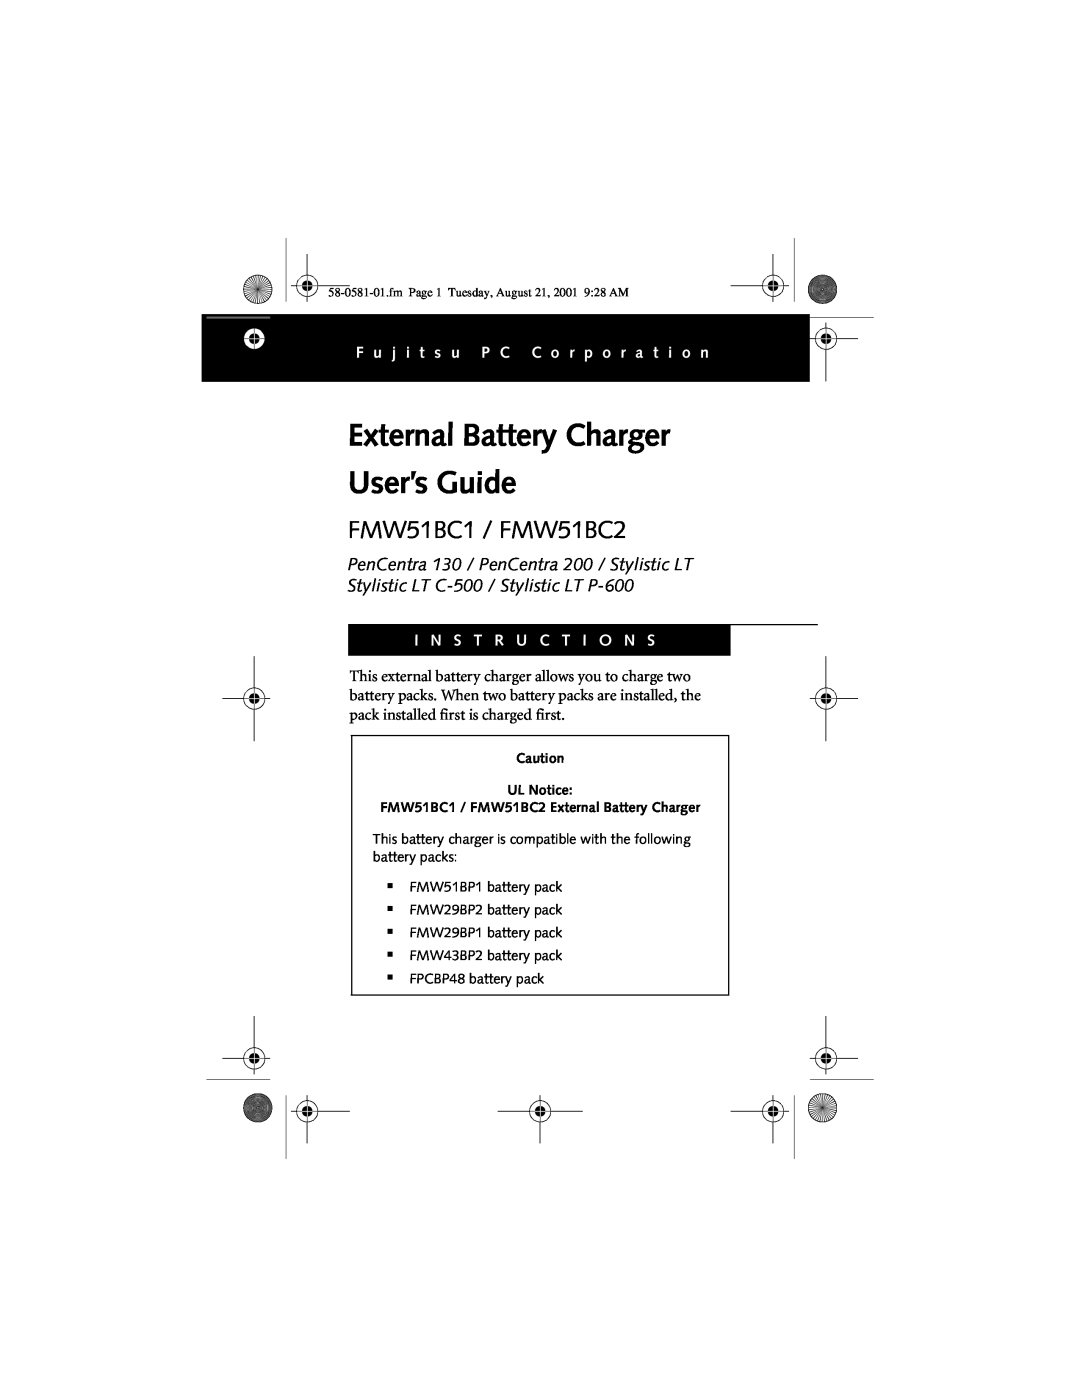 Fujitsu Siemens Computers manual External Battery Charger User’s Guide, FMW51BC1 / FMW51BC2, I N S T R U C T I O N S 